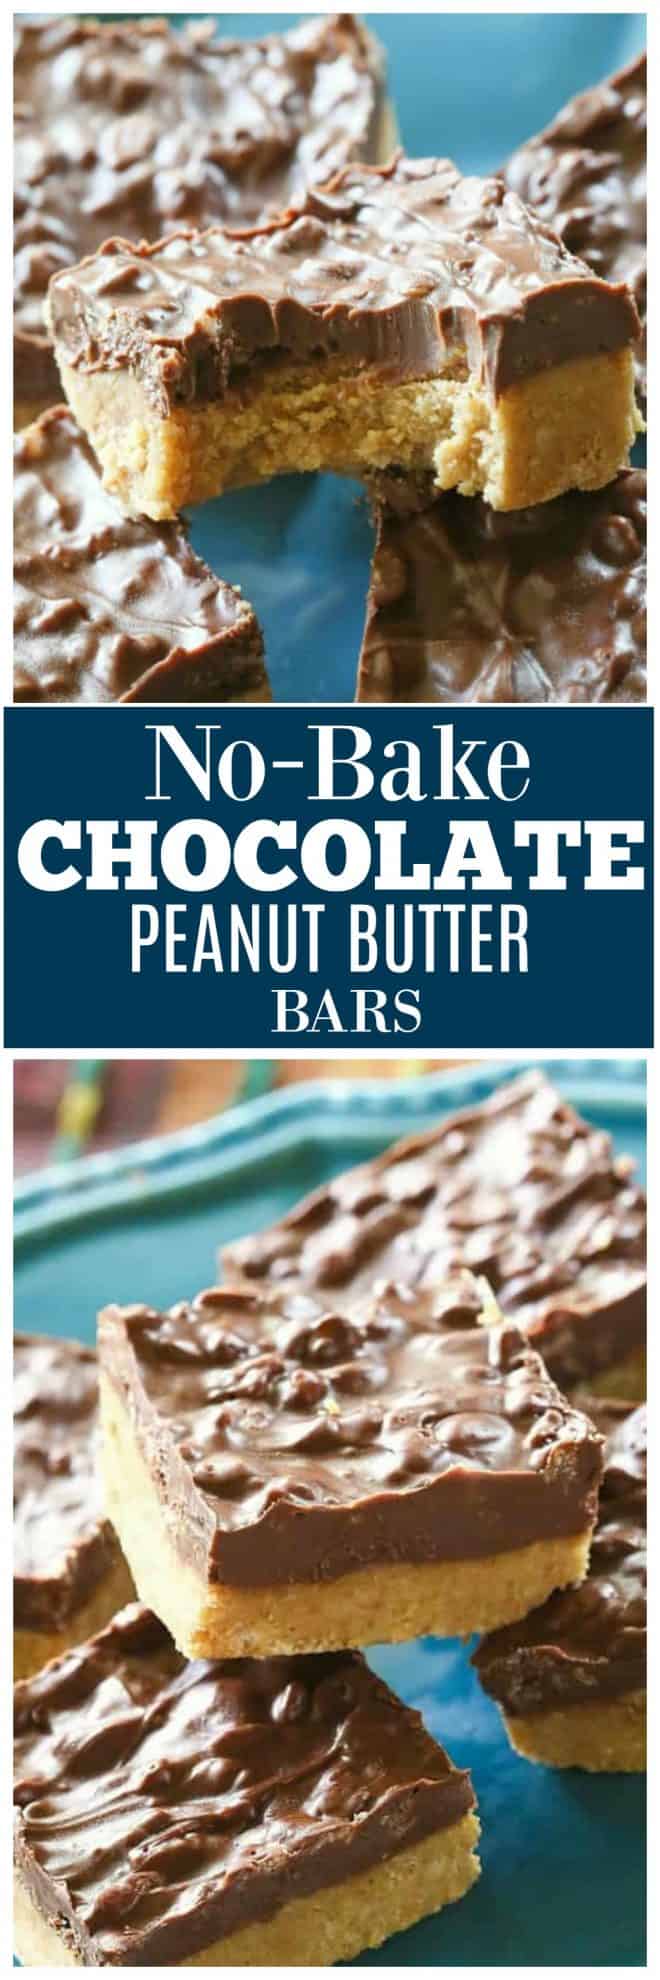 no-bake chocolate peanut butter bars